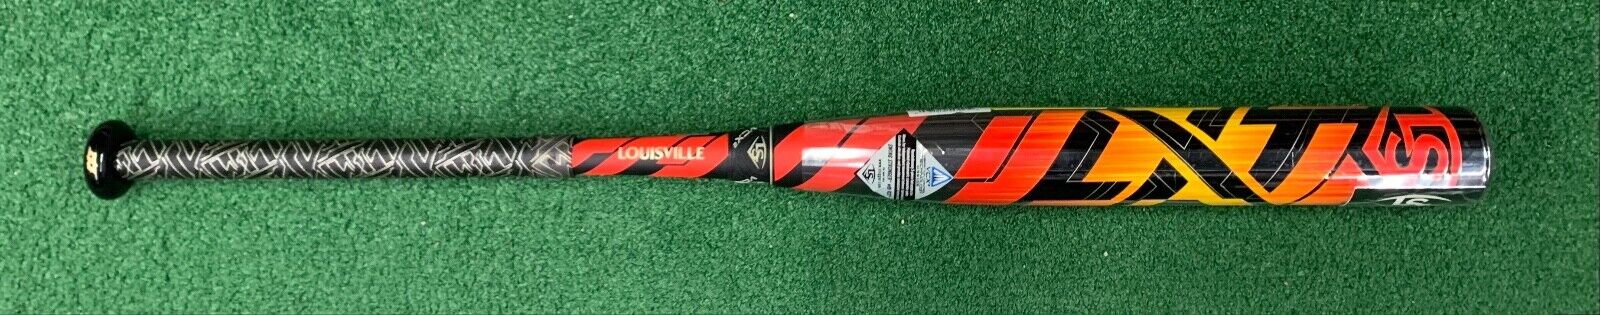 2022 Louisville Slugger Lxt -10 Fastpitch Softball Bat - 31" 21 Oz.